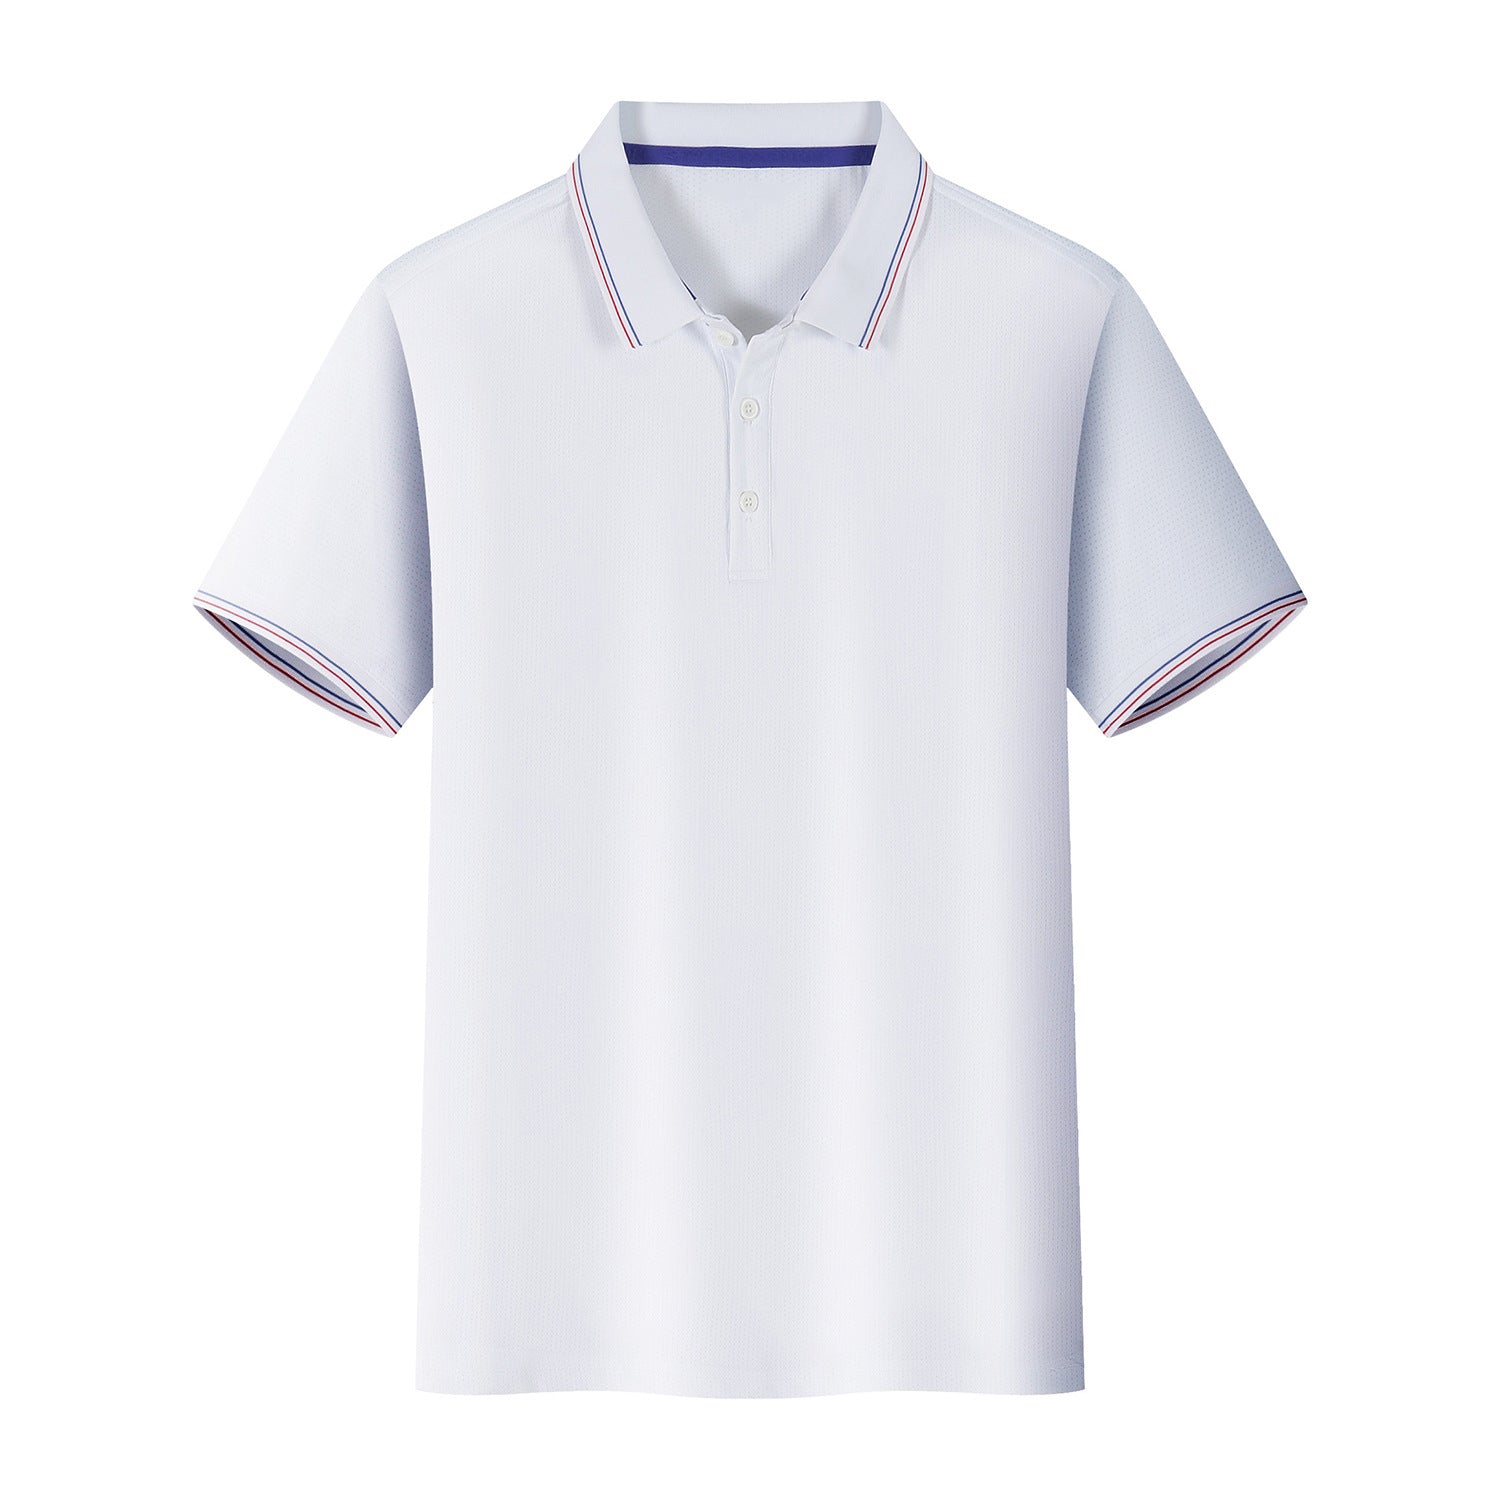 Sidiou Group Anniou Customized Summer Polyester Short Sleeve T-shirts Sports Golf Polo Shirt Basic Blank Company Uniform Polo Shirt